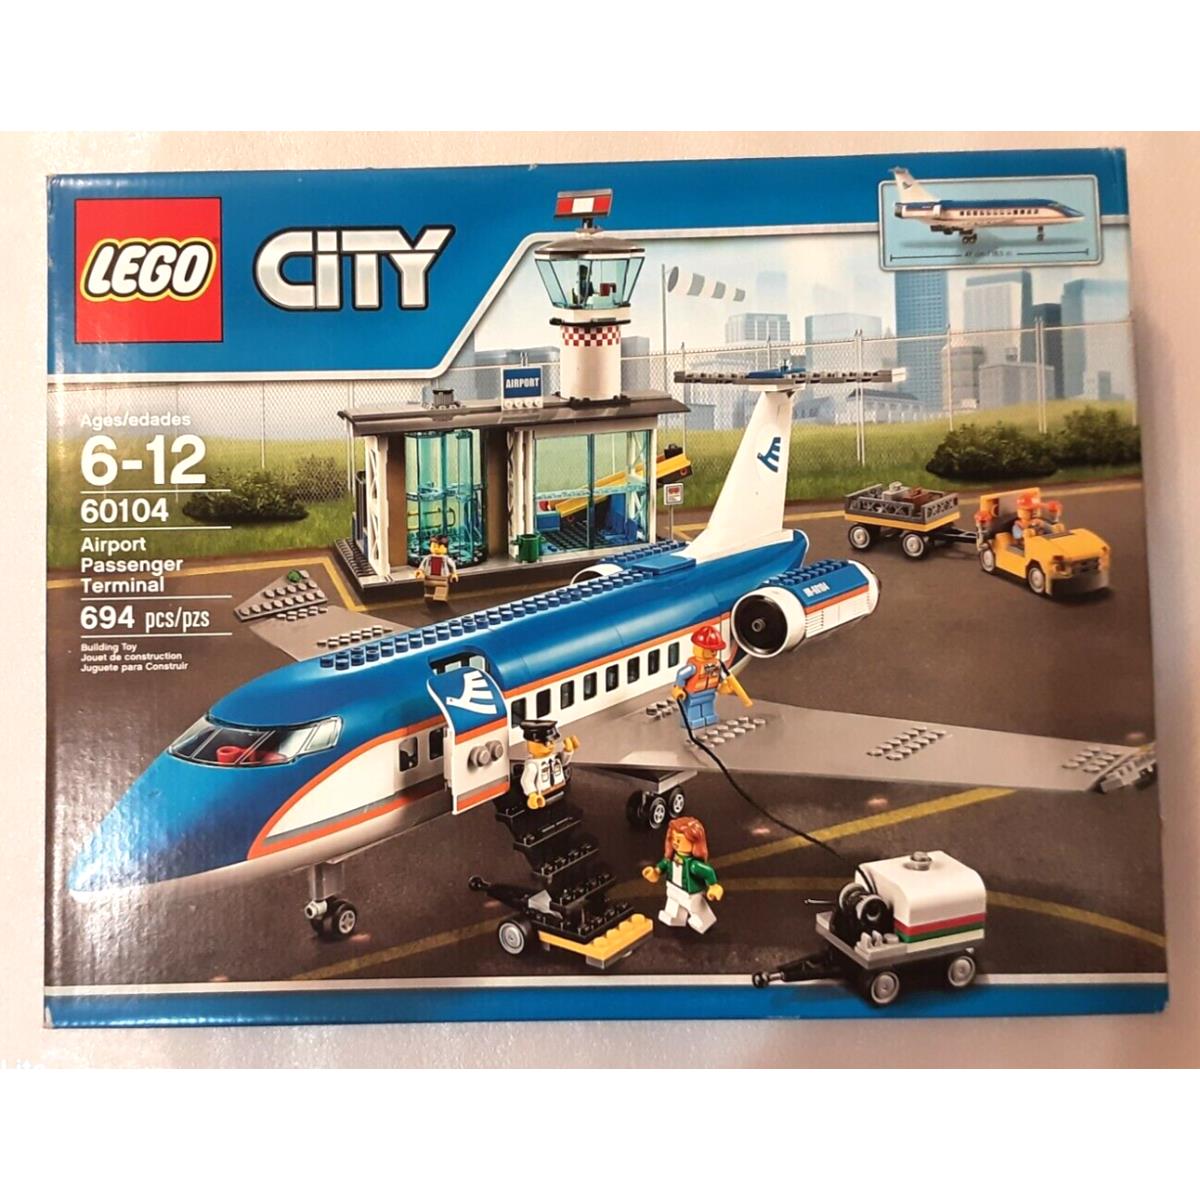 Lego 60104 City Airport Passenger Terminal Construction Set